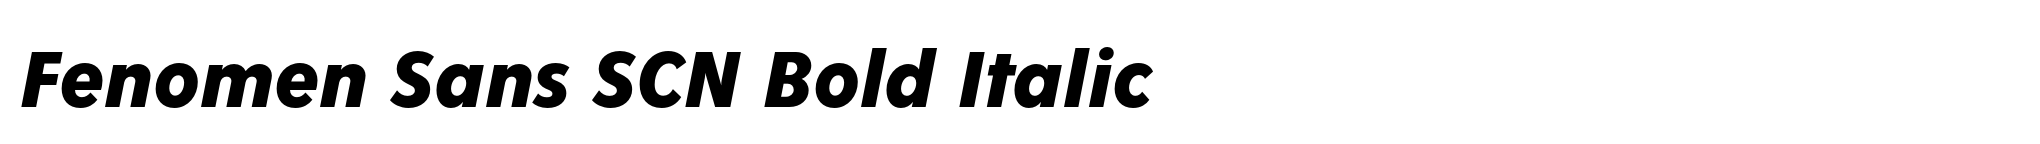 Fenomen Sans SCN Bold Italic image